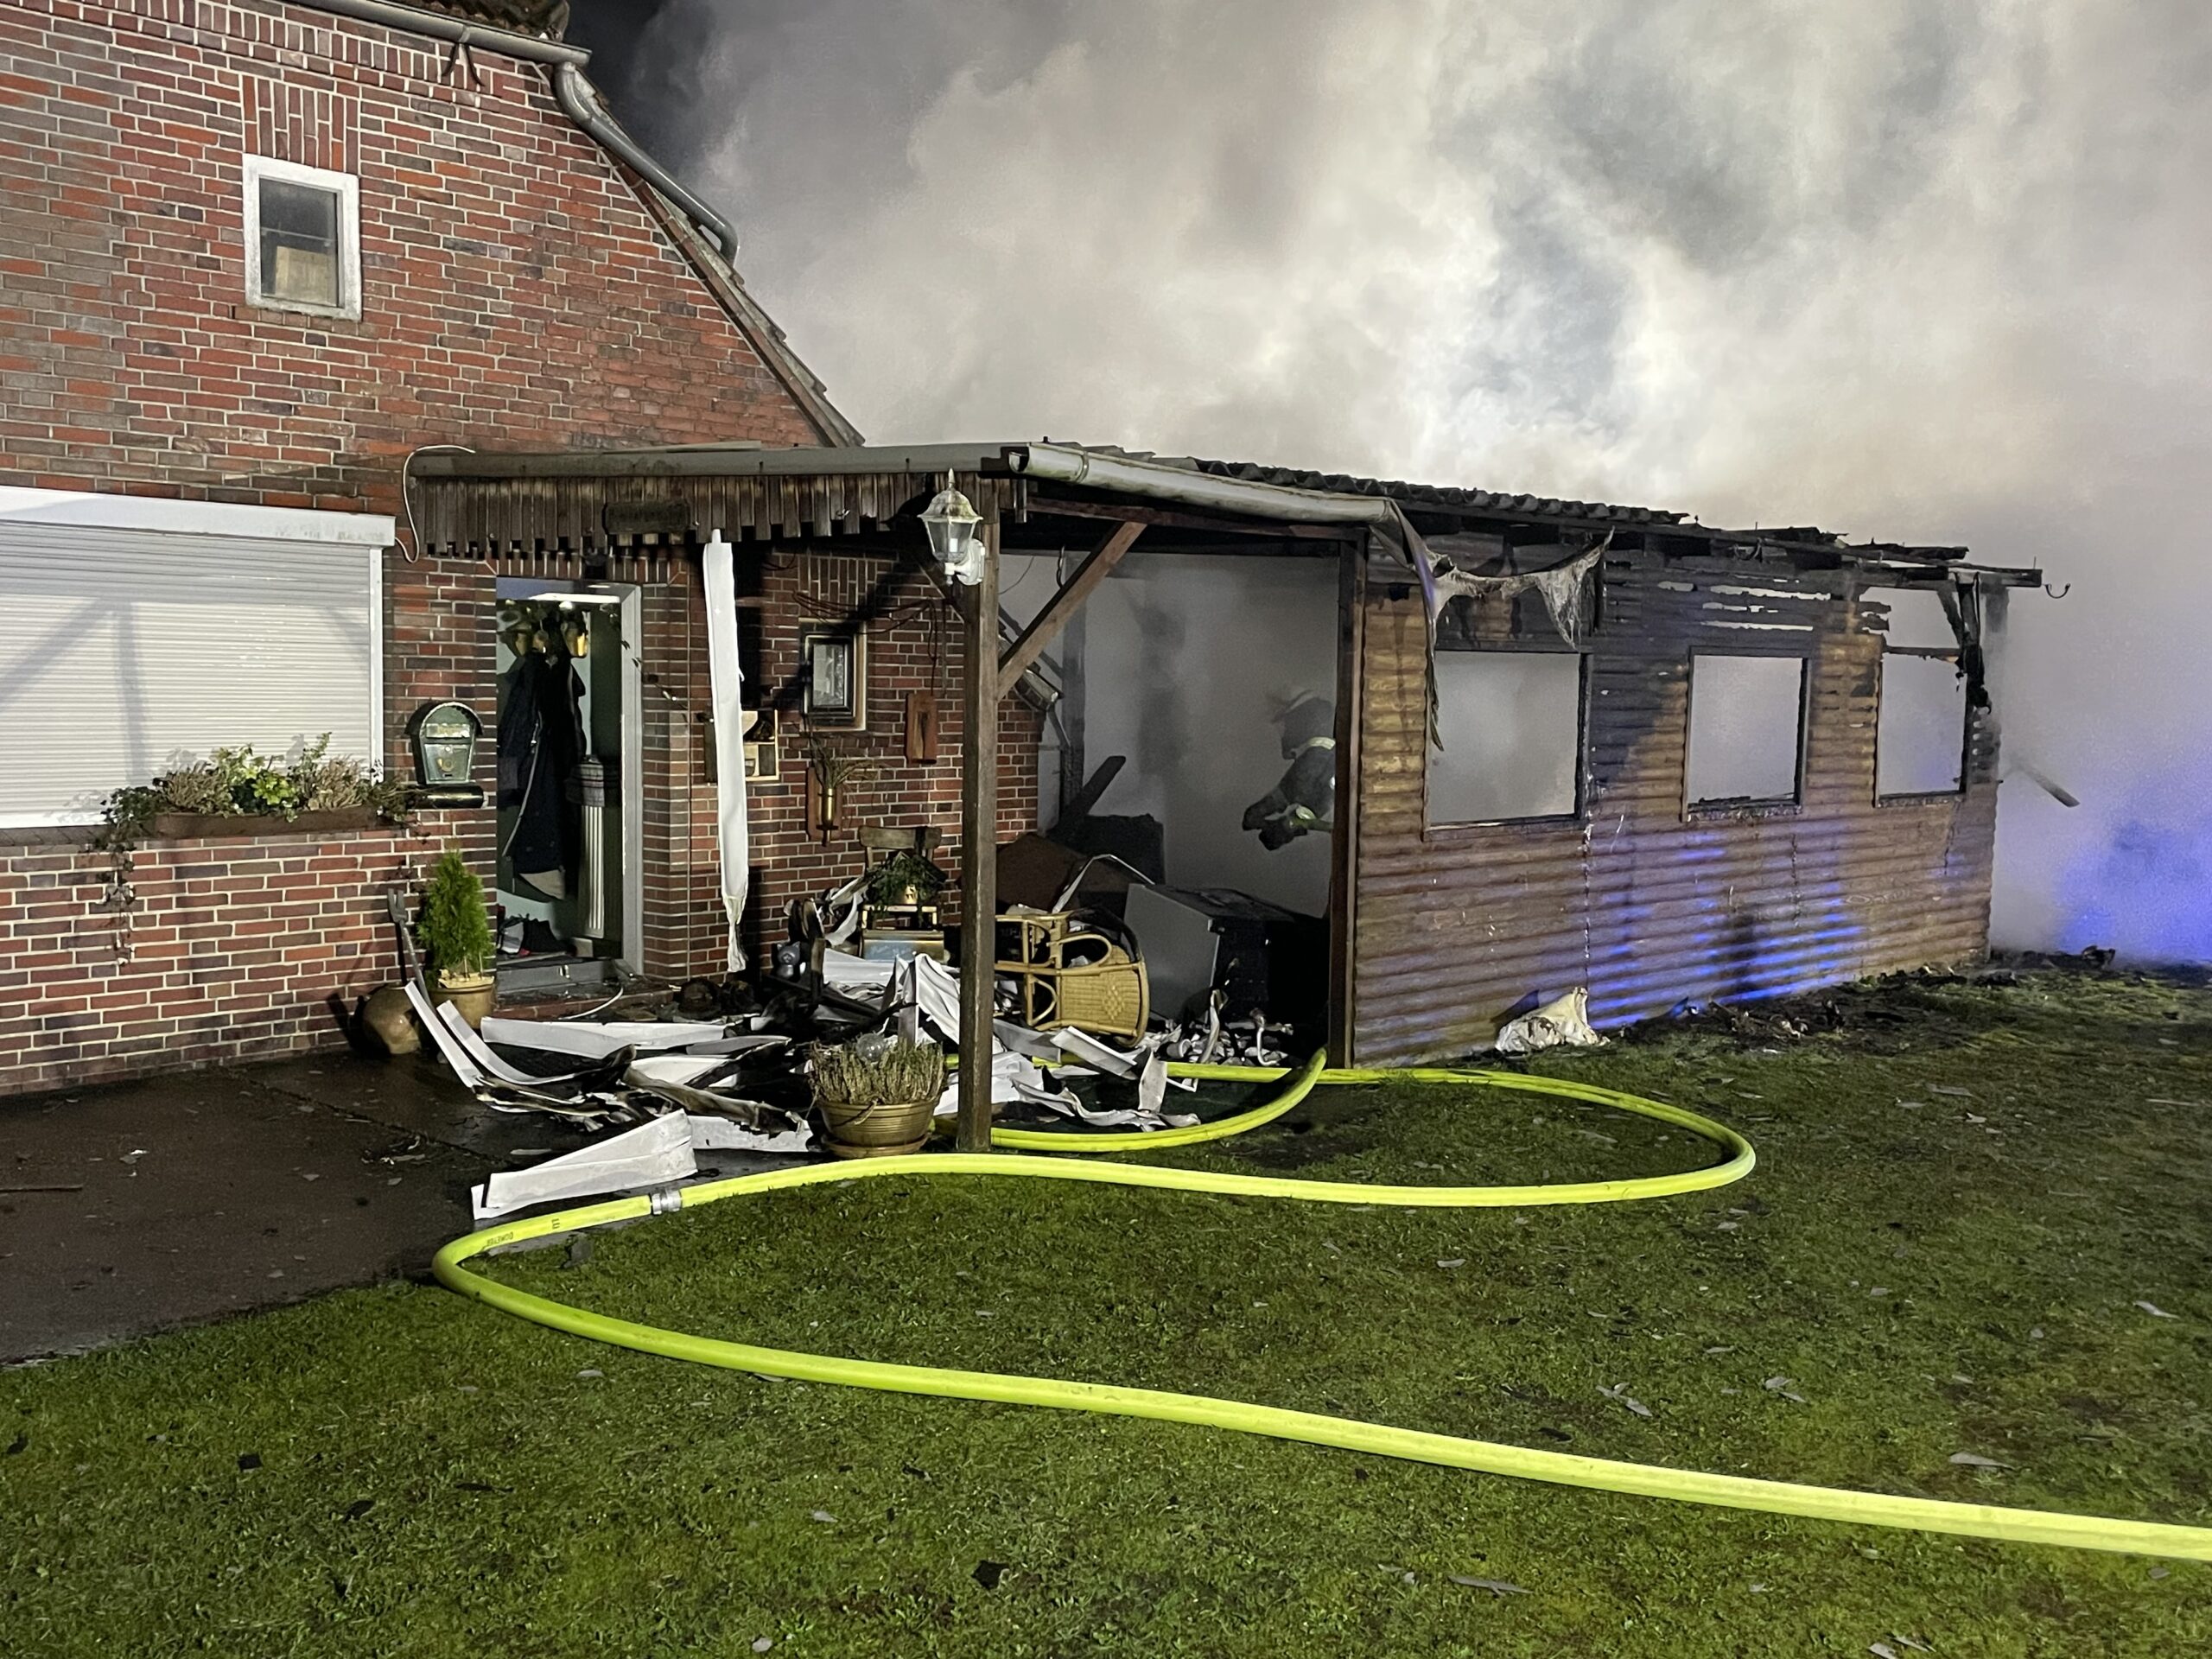 Holtland: Frau aus brennendem Haus gerettet